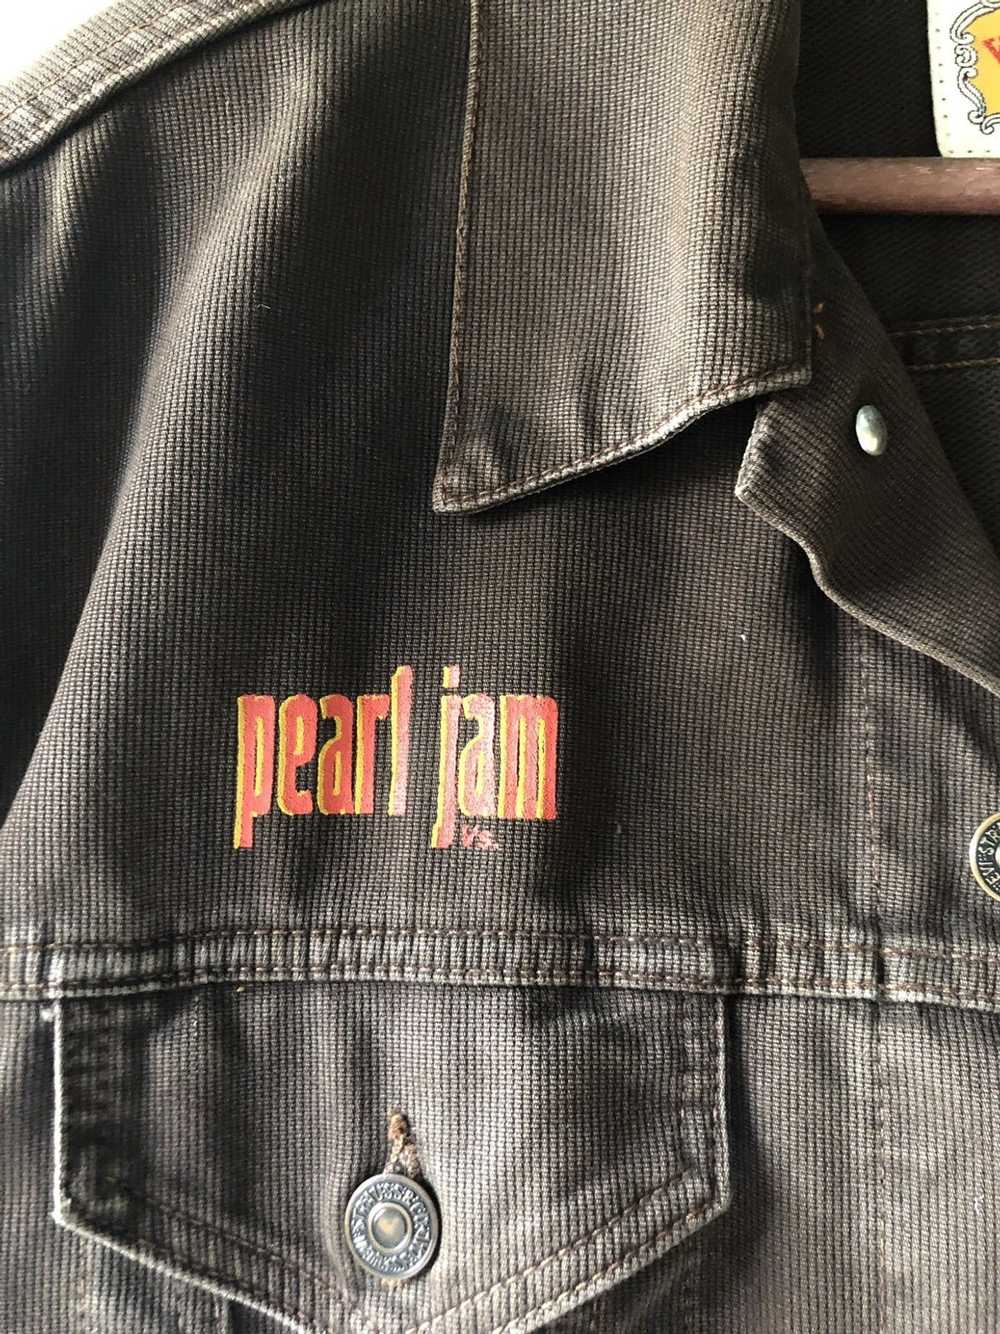 Levi's Vintage Clothing Levi’s Pearl jam x Sony m… - image 2